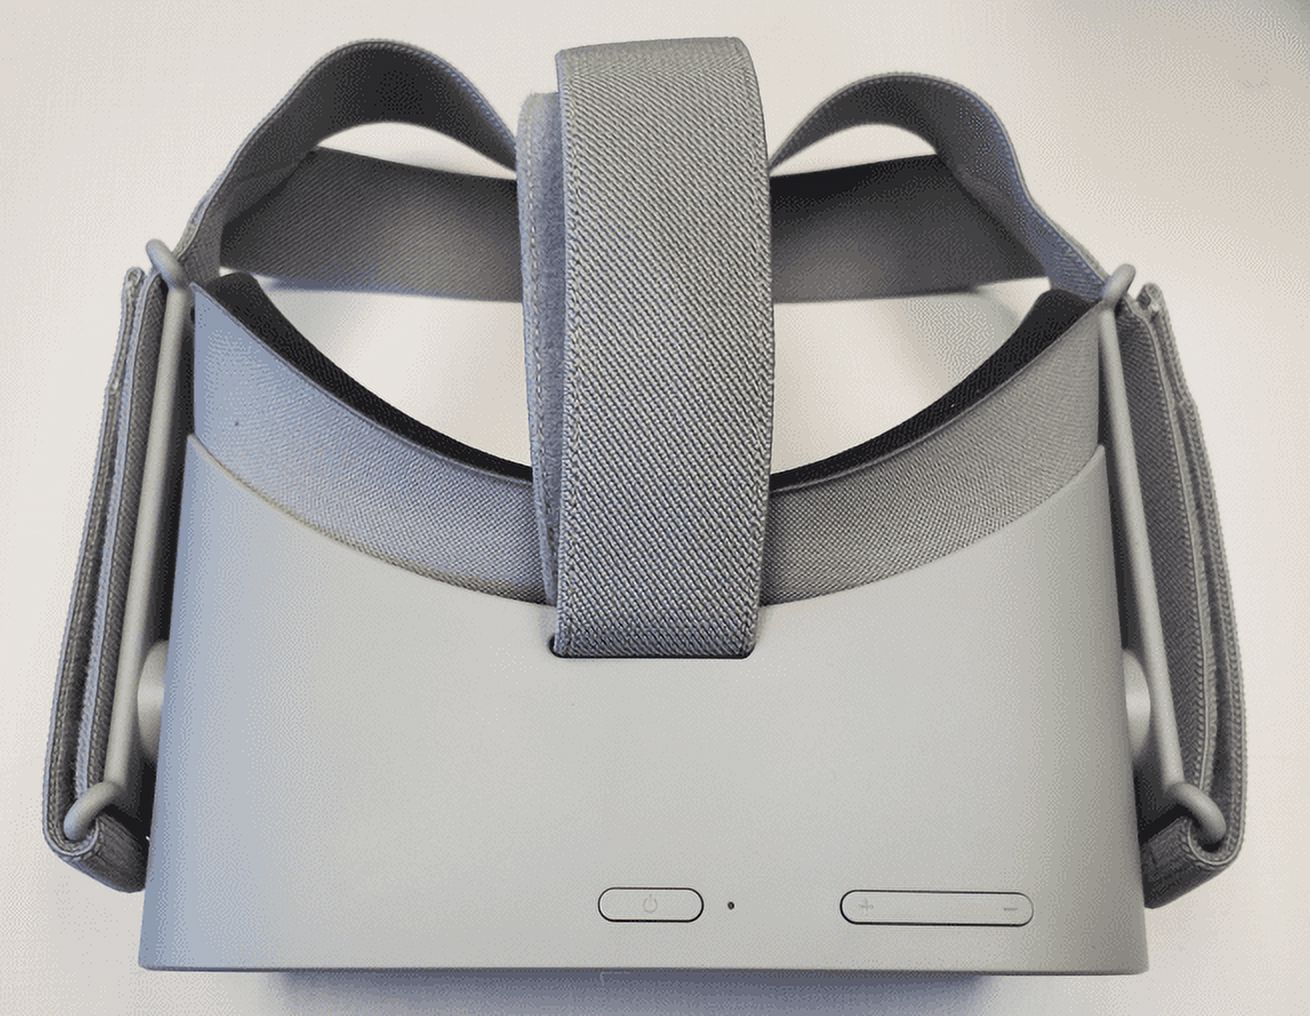 Restored Oculus Go Standalone Virtual Reality Headset 32GB Gray Bluetooth (Refurbished) - image 2 of 4